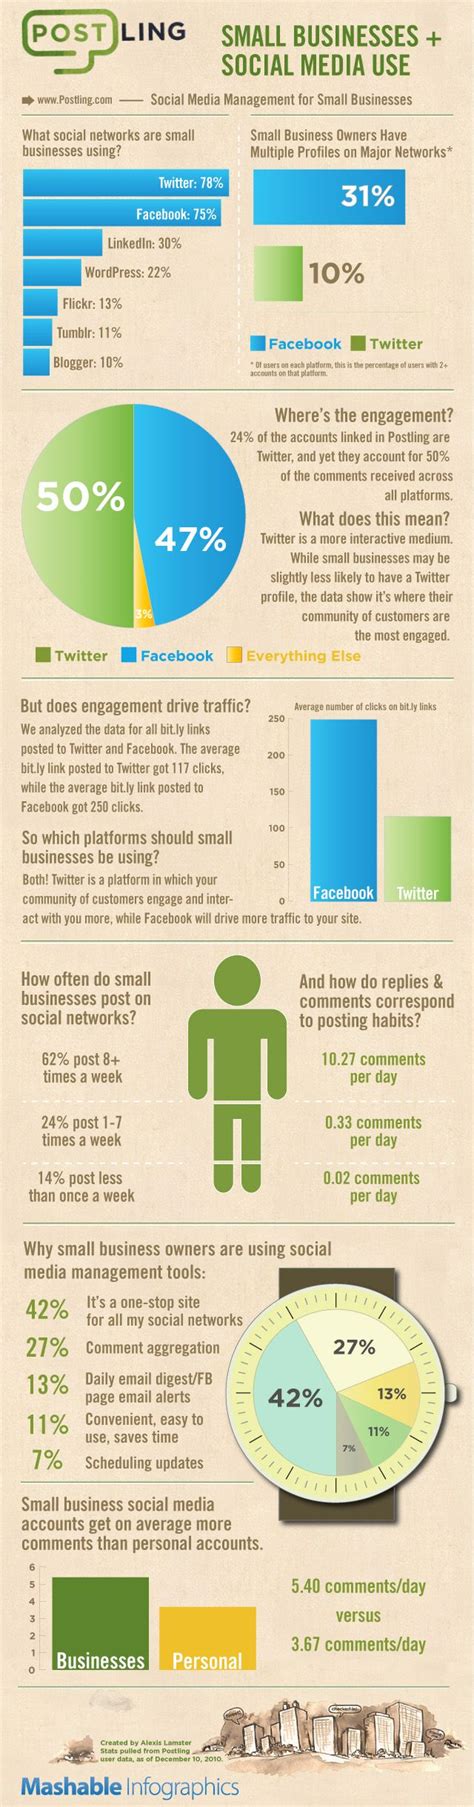 Small Business Social Media Use Via Inbound